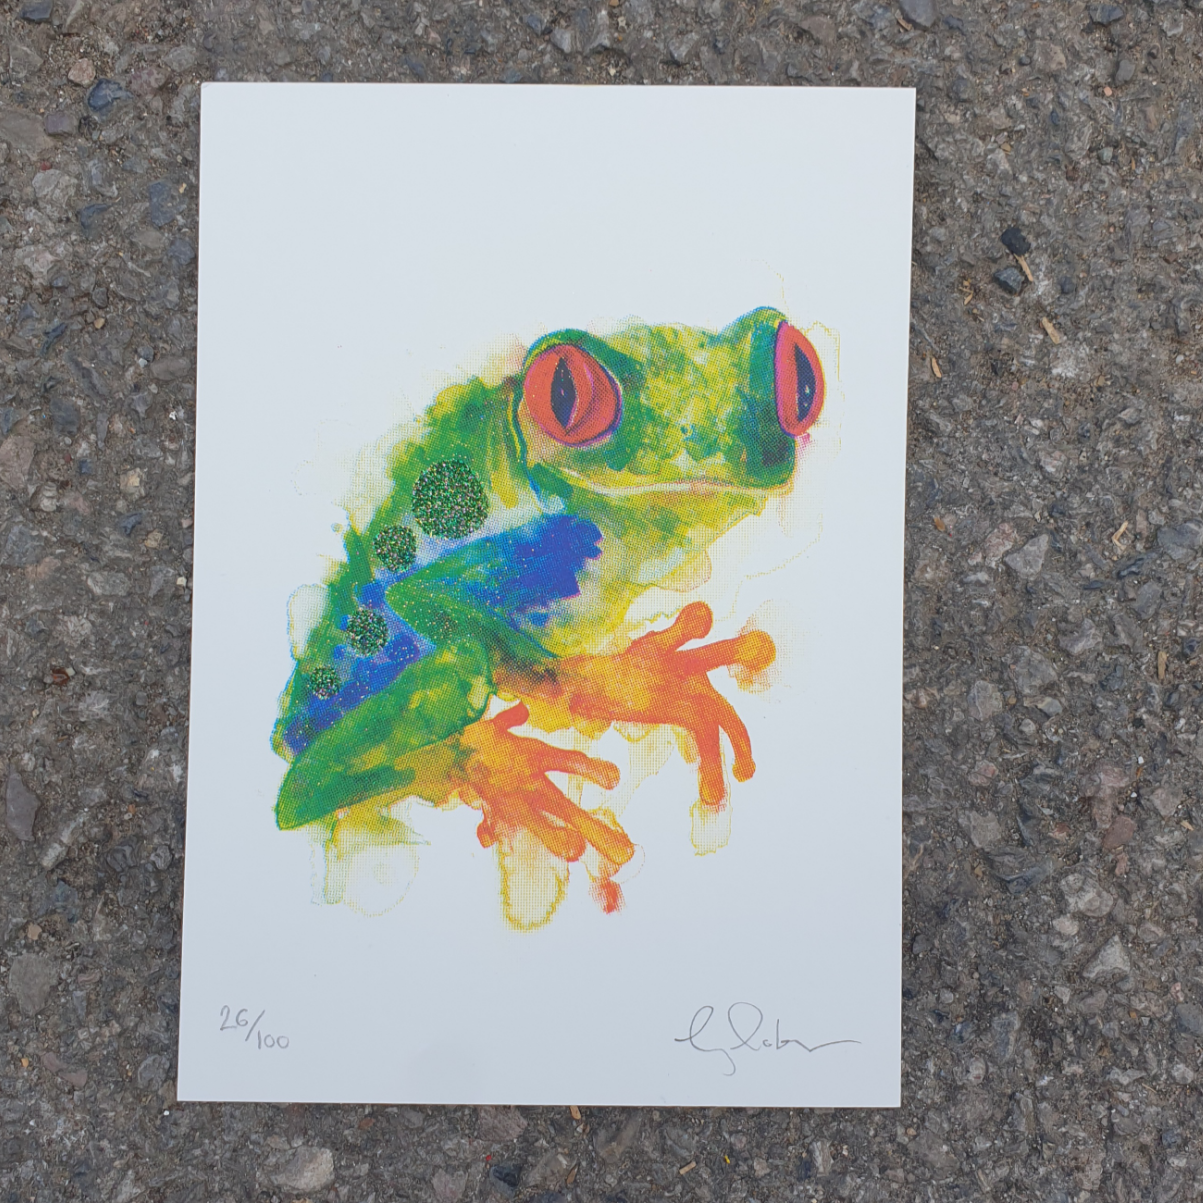 Mini tree frog